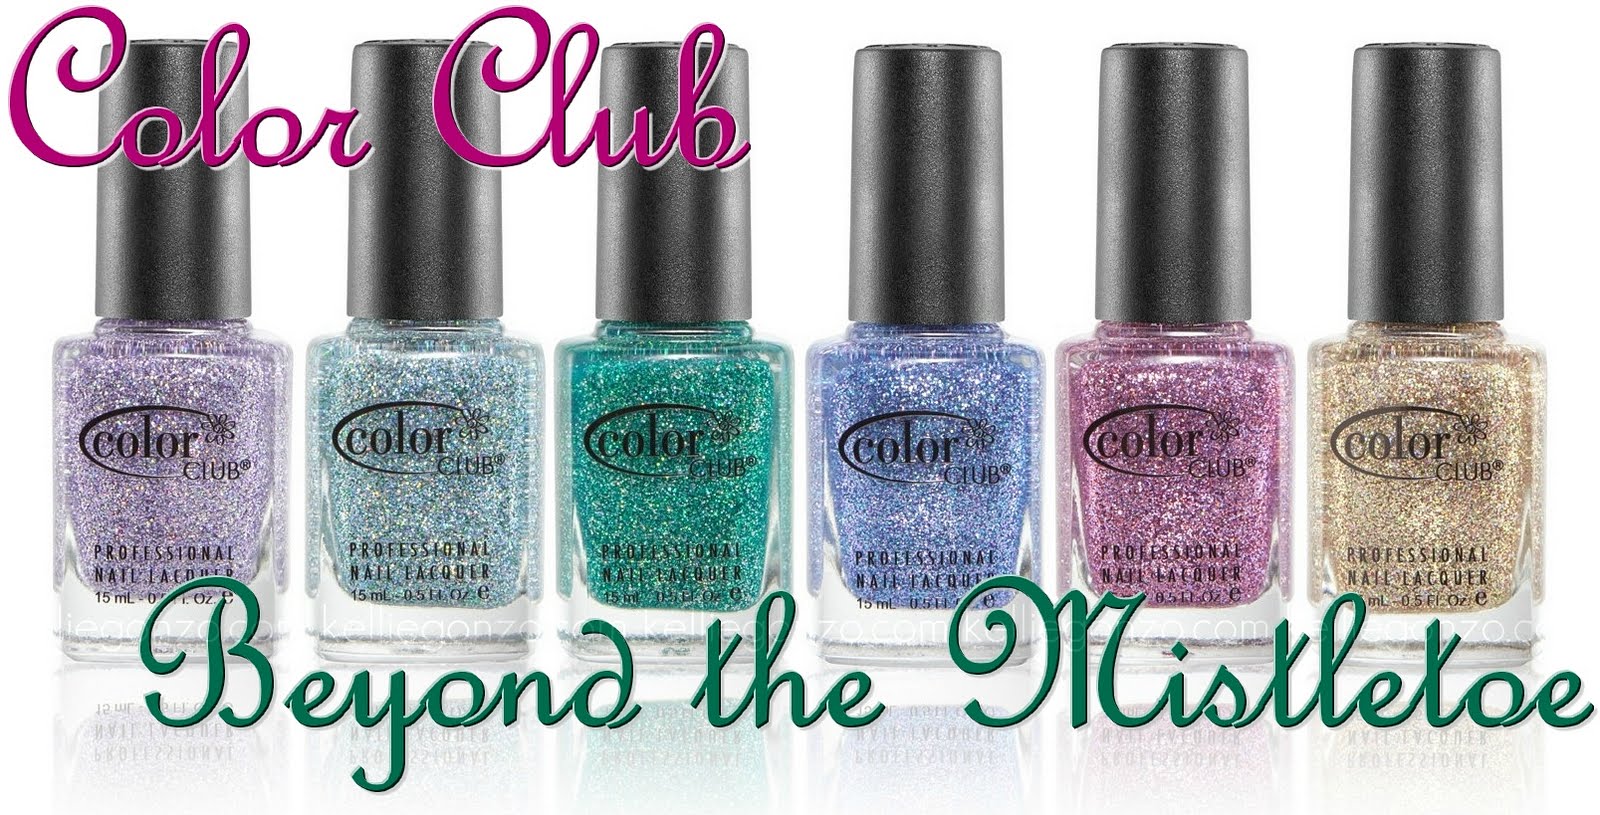 Color Club Mistletoe Glitters Nail Polish - wide 1